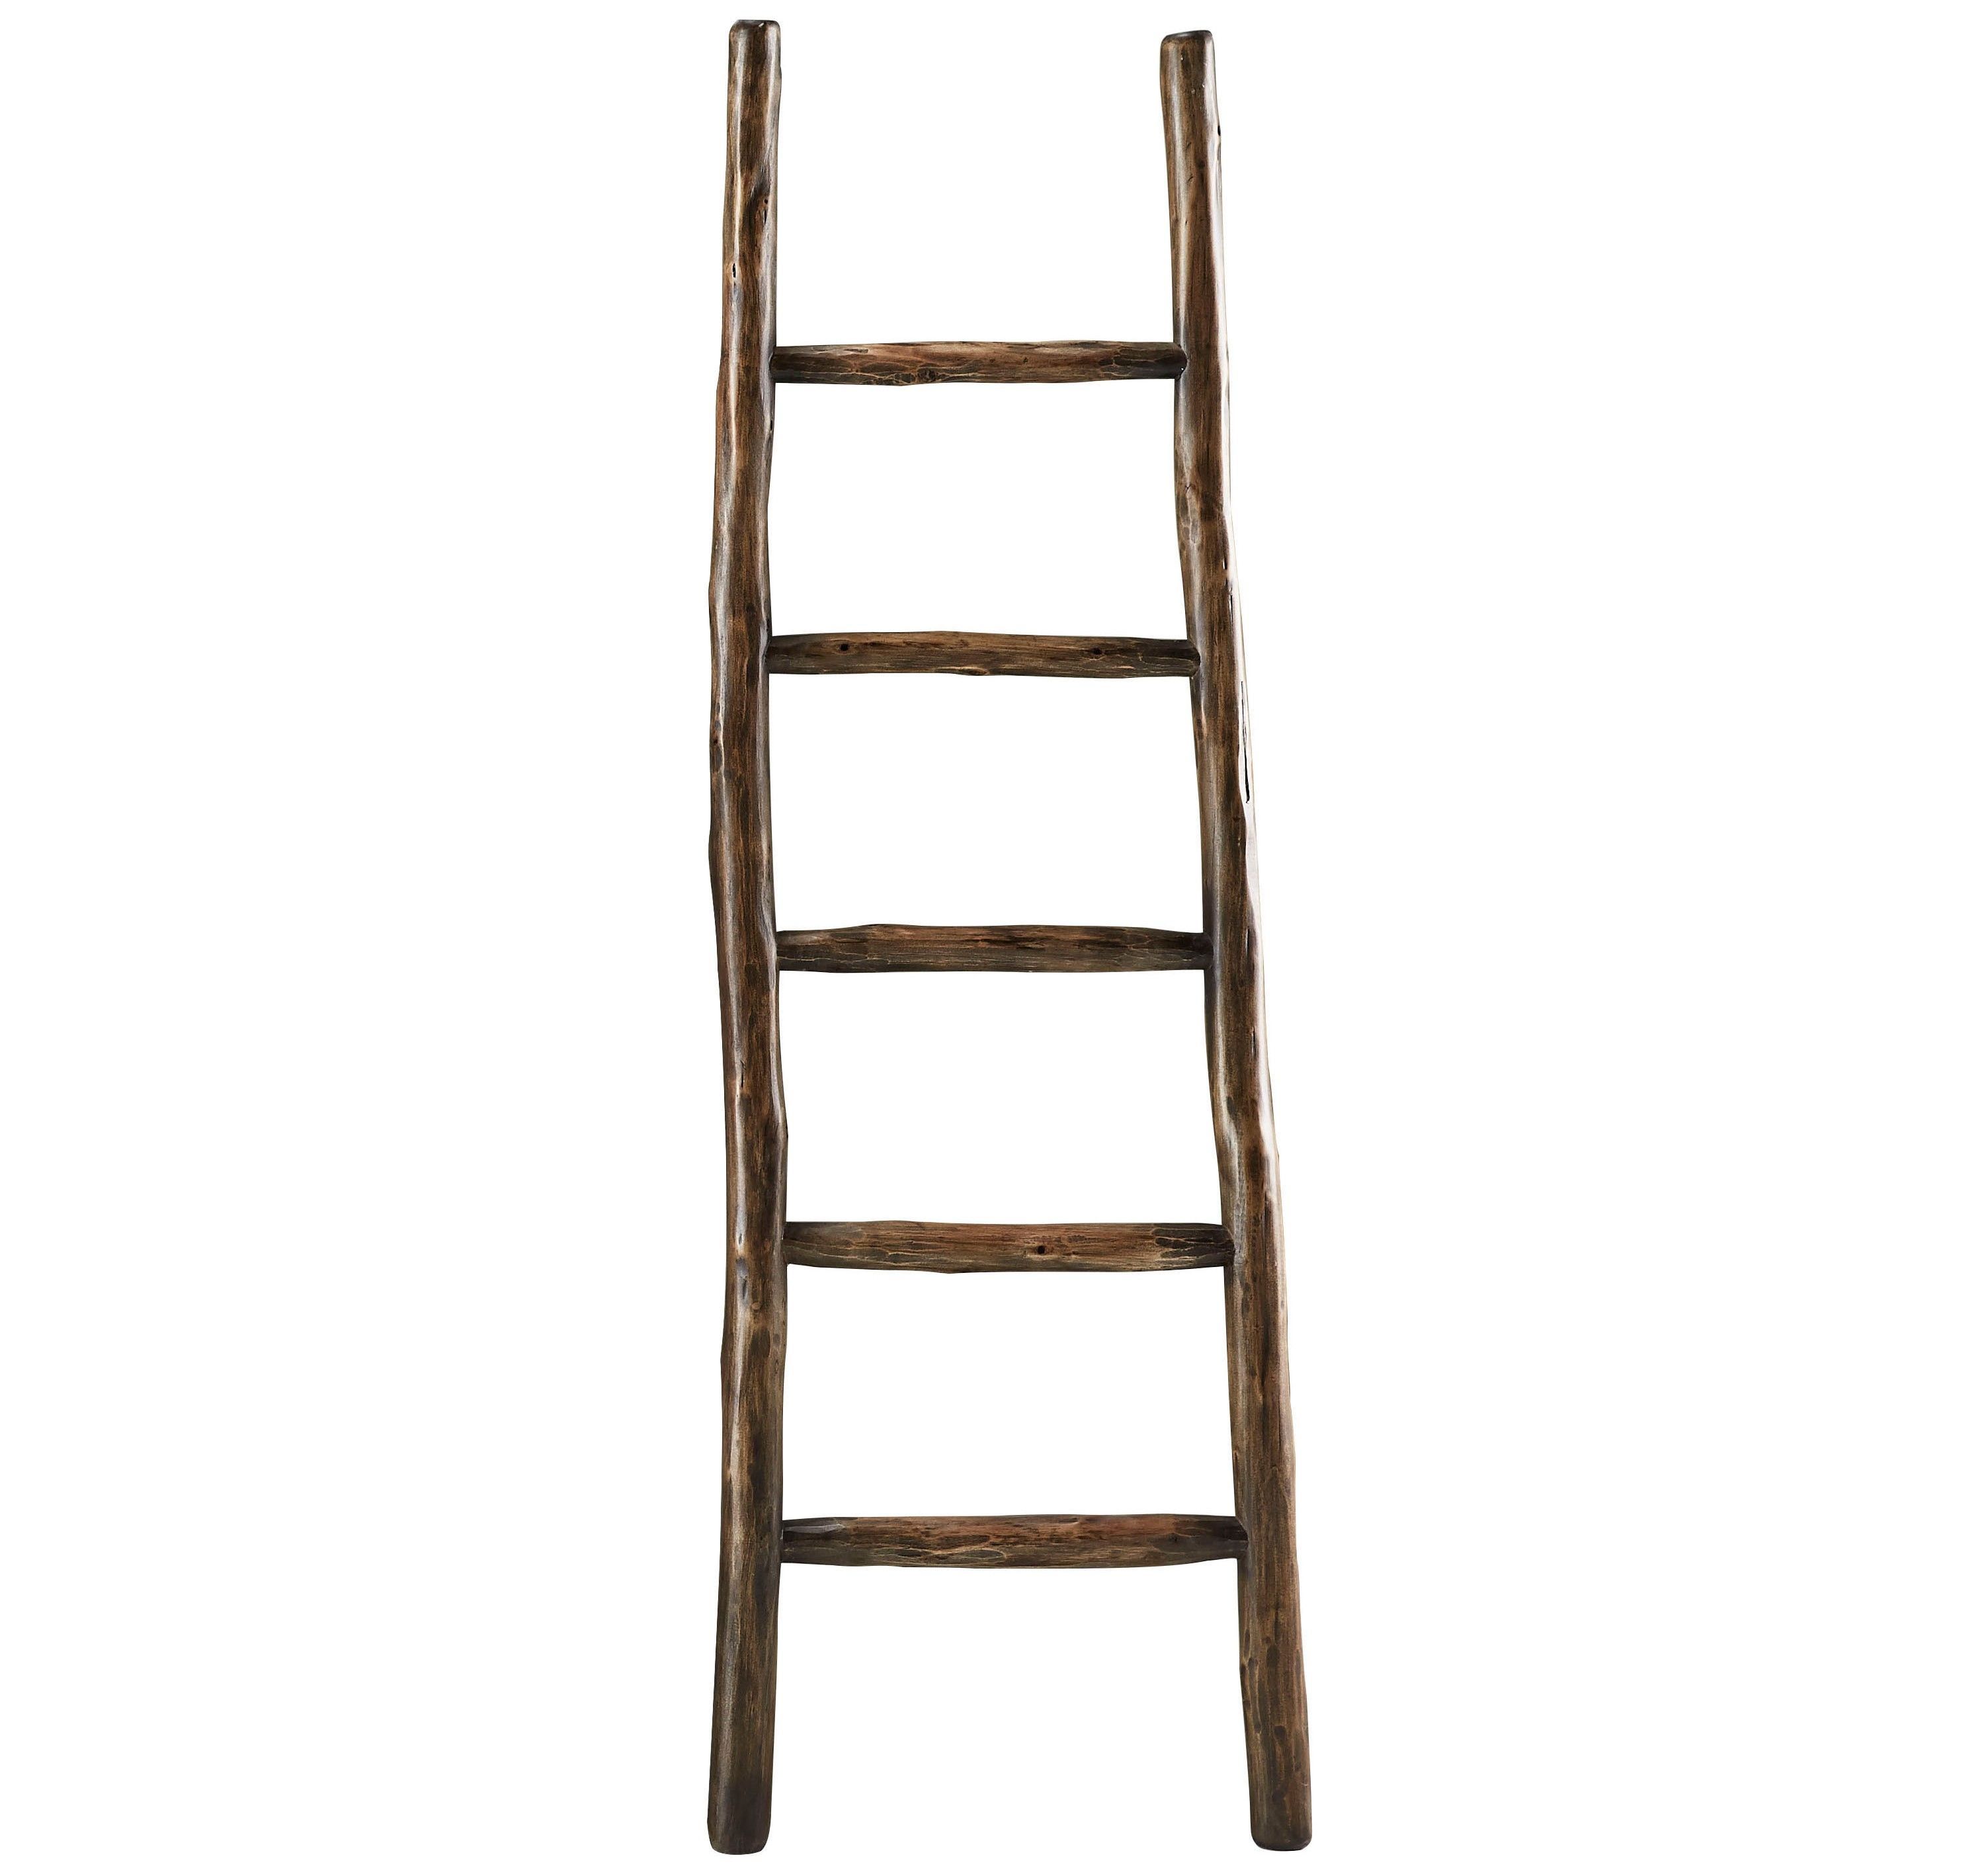 A212-10f 68 X 24 X 3 In. Millie Blanket Ladder - French Roast